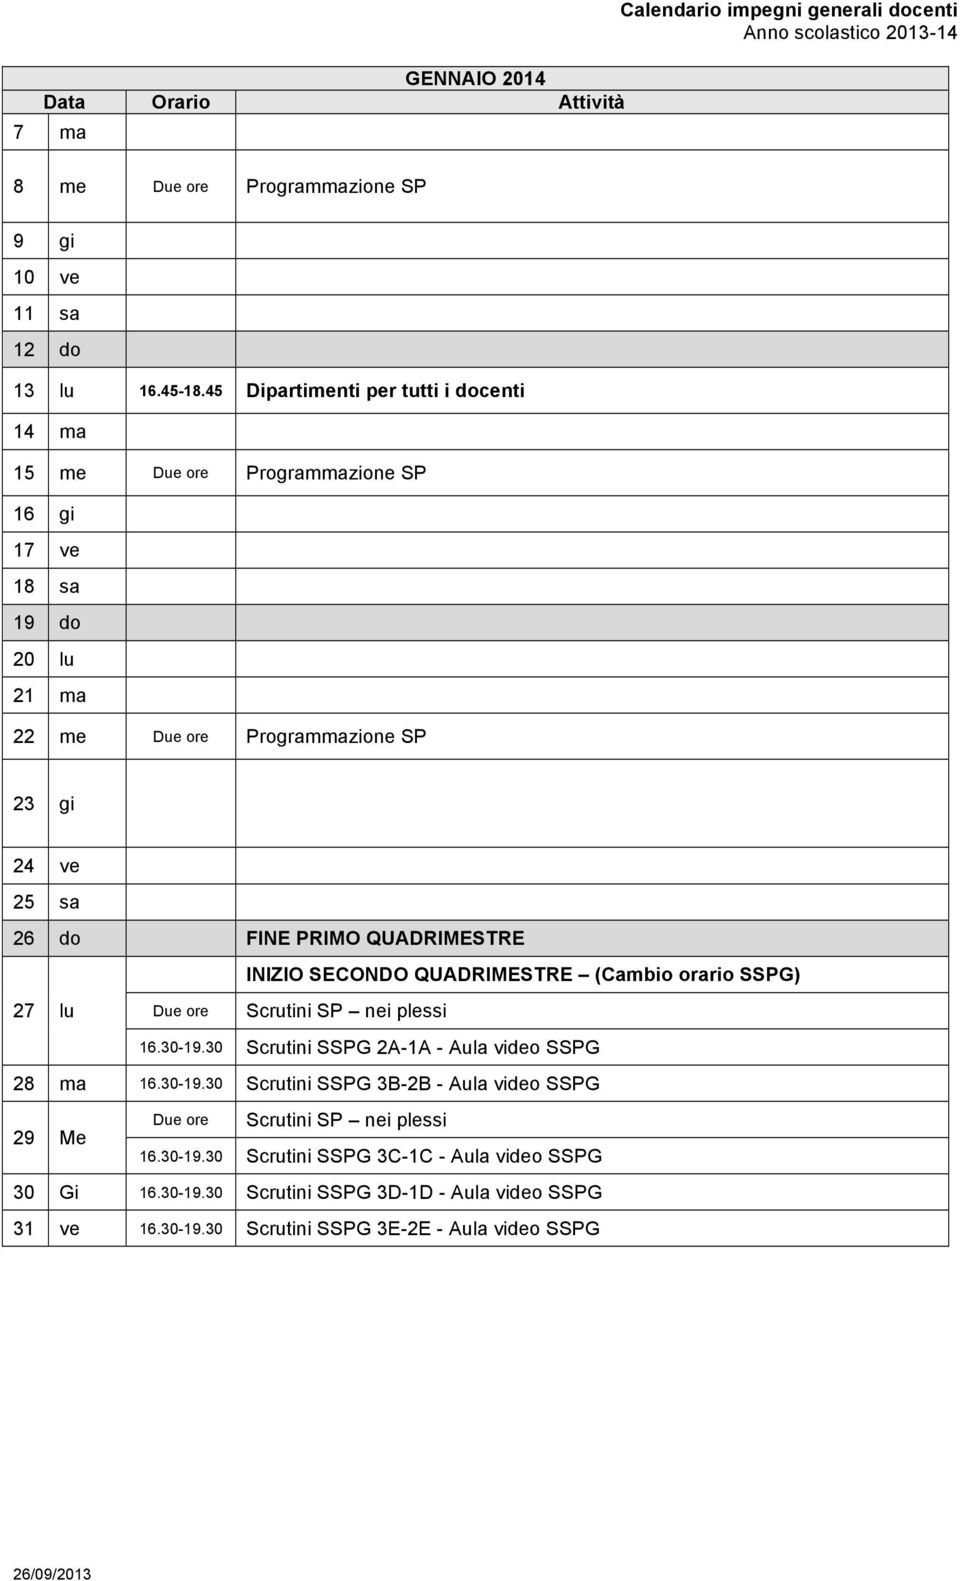 QUADRIMESTRE (Cambio orario SSPG) 27 lu Scrutini SP nei plessi 16.30-19.30 Scrutini SSPG 2A-1A - Aula video SSPG 28 ma 16.30-19.30 Scrutini SSPG 3B-2B - Aula video SSPG 29 Me Scrutini SP nei plessi 16.